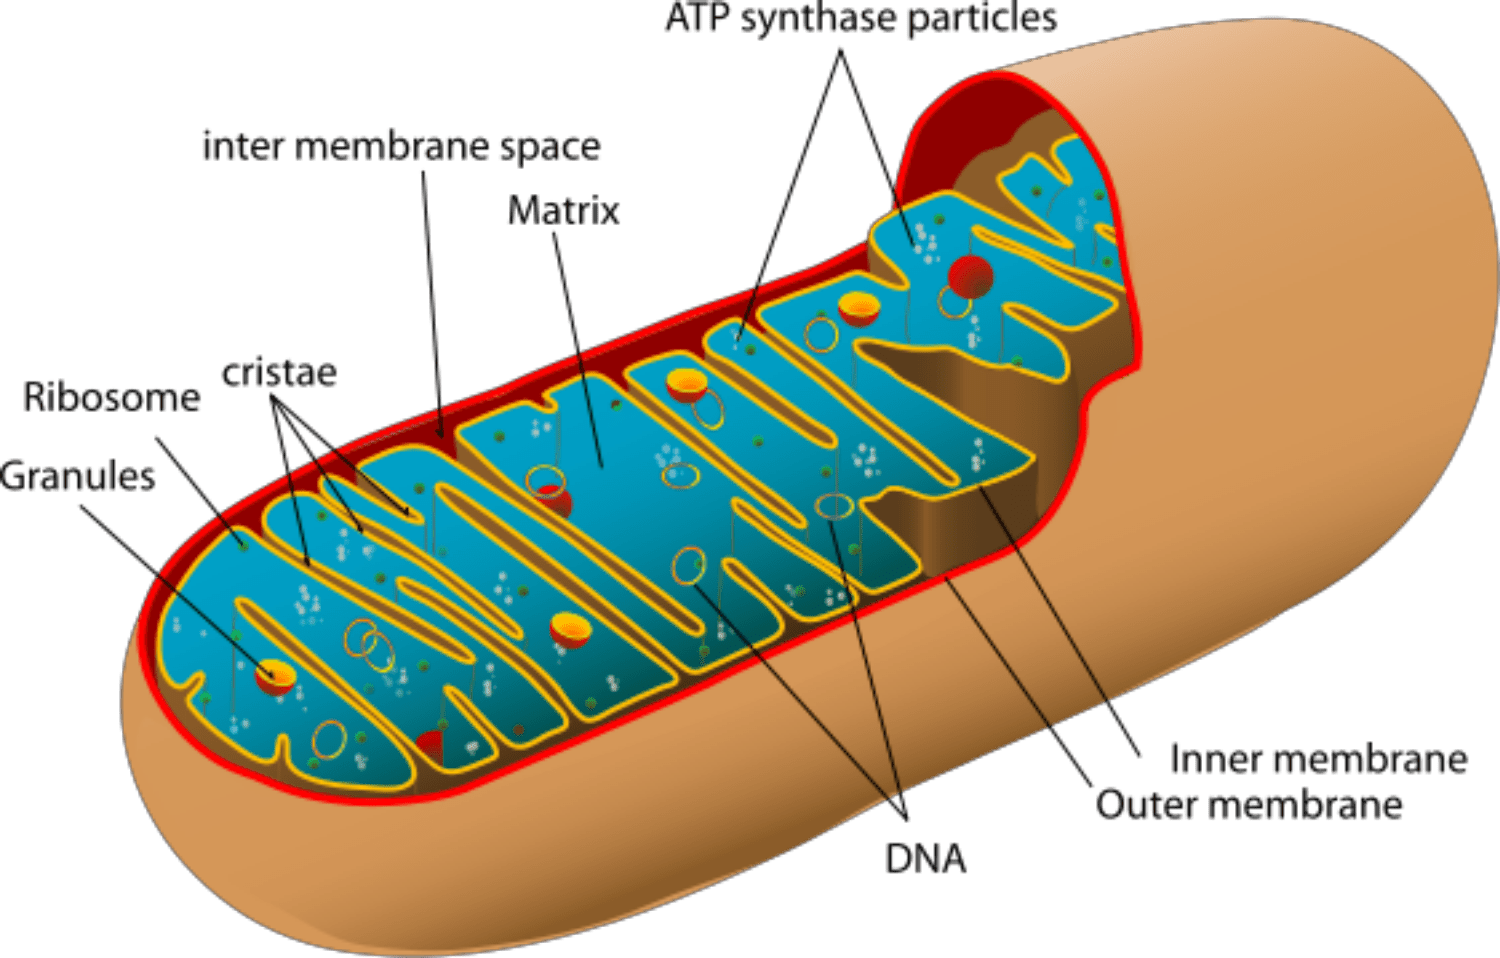 Mitochondria - Divine Intervention?